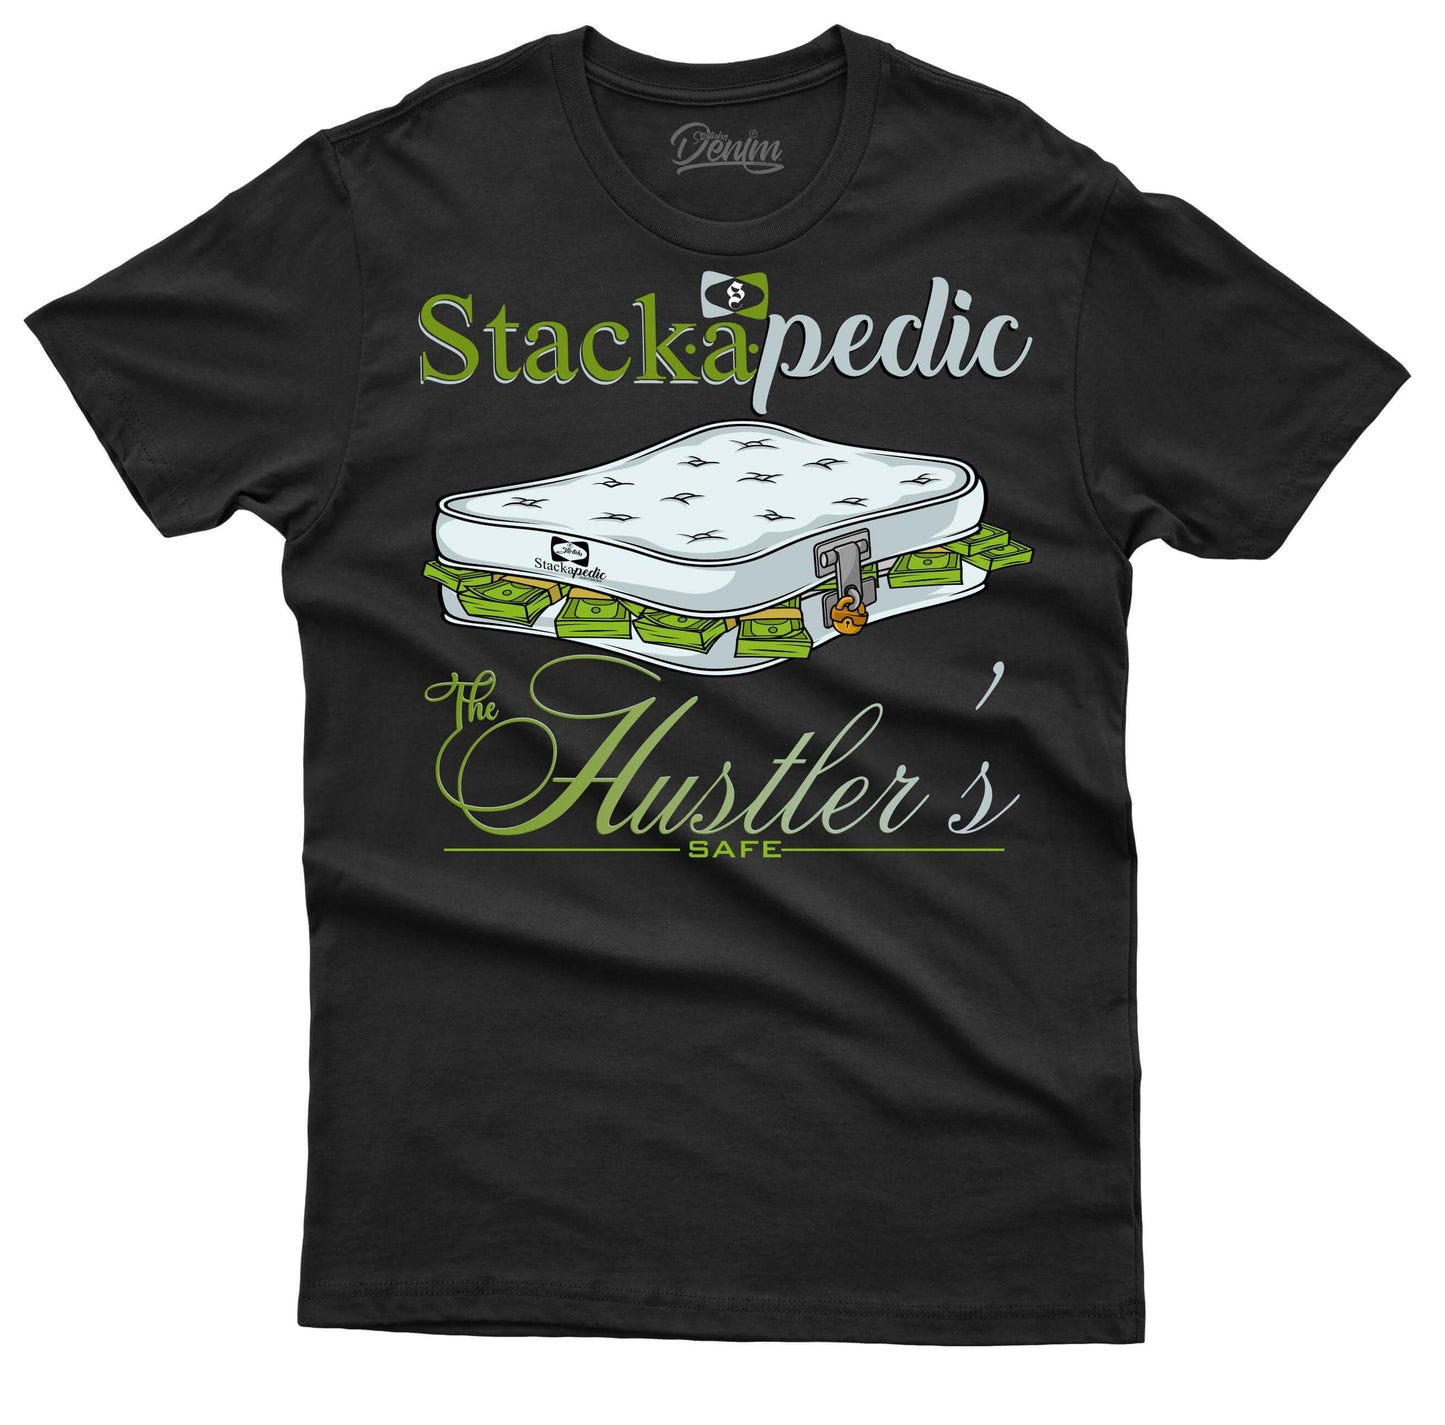 STACK-A-PEDIC "A HUSTLER'S SAFE"